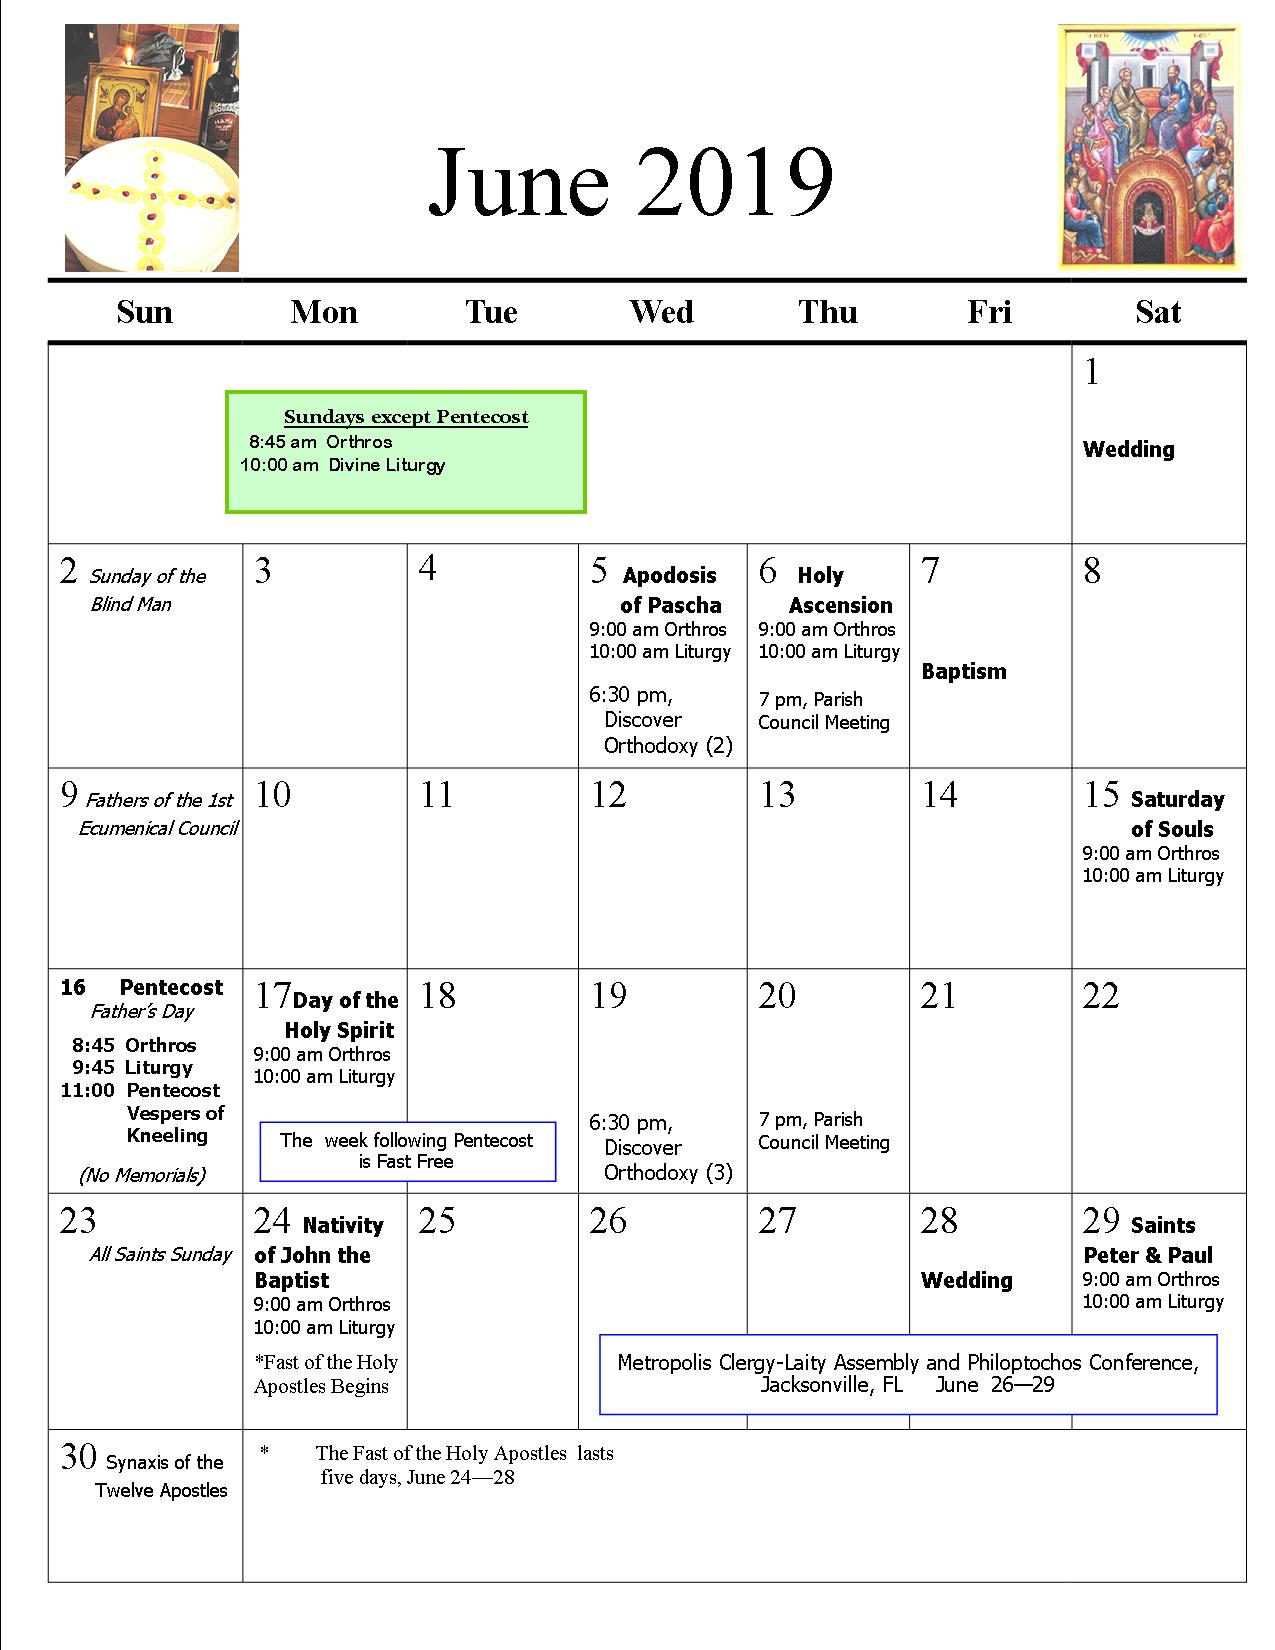 June 2019 Calendar, rev